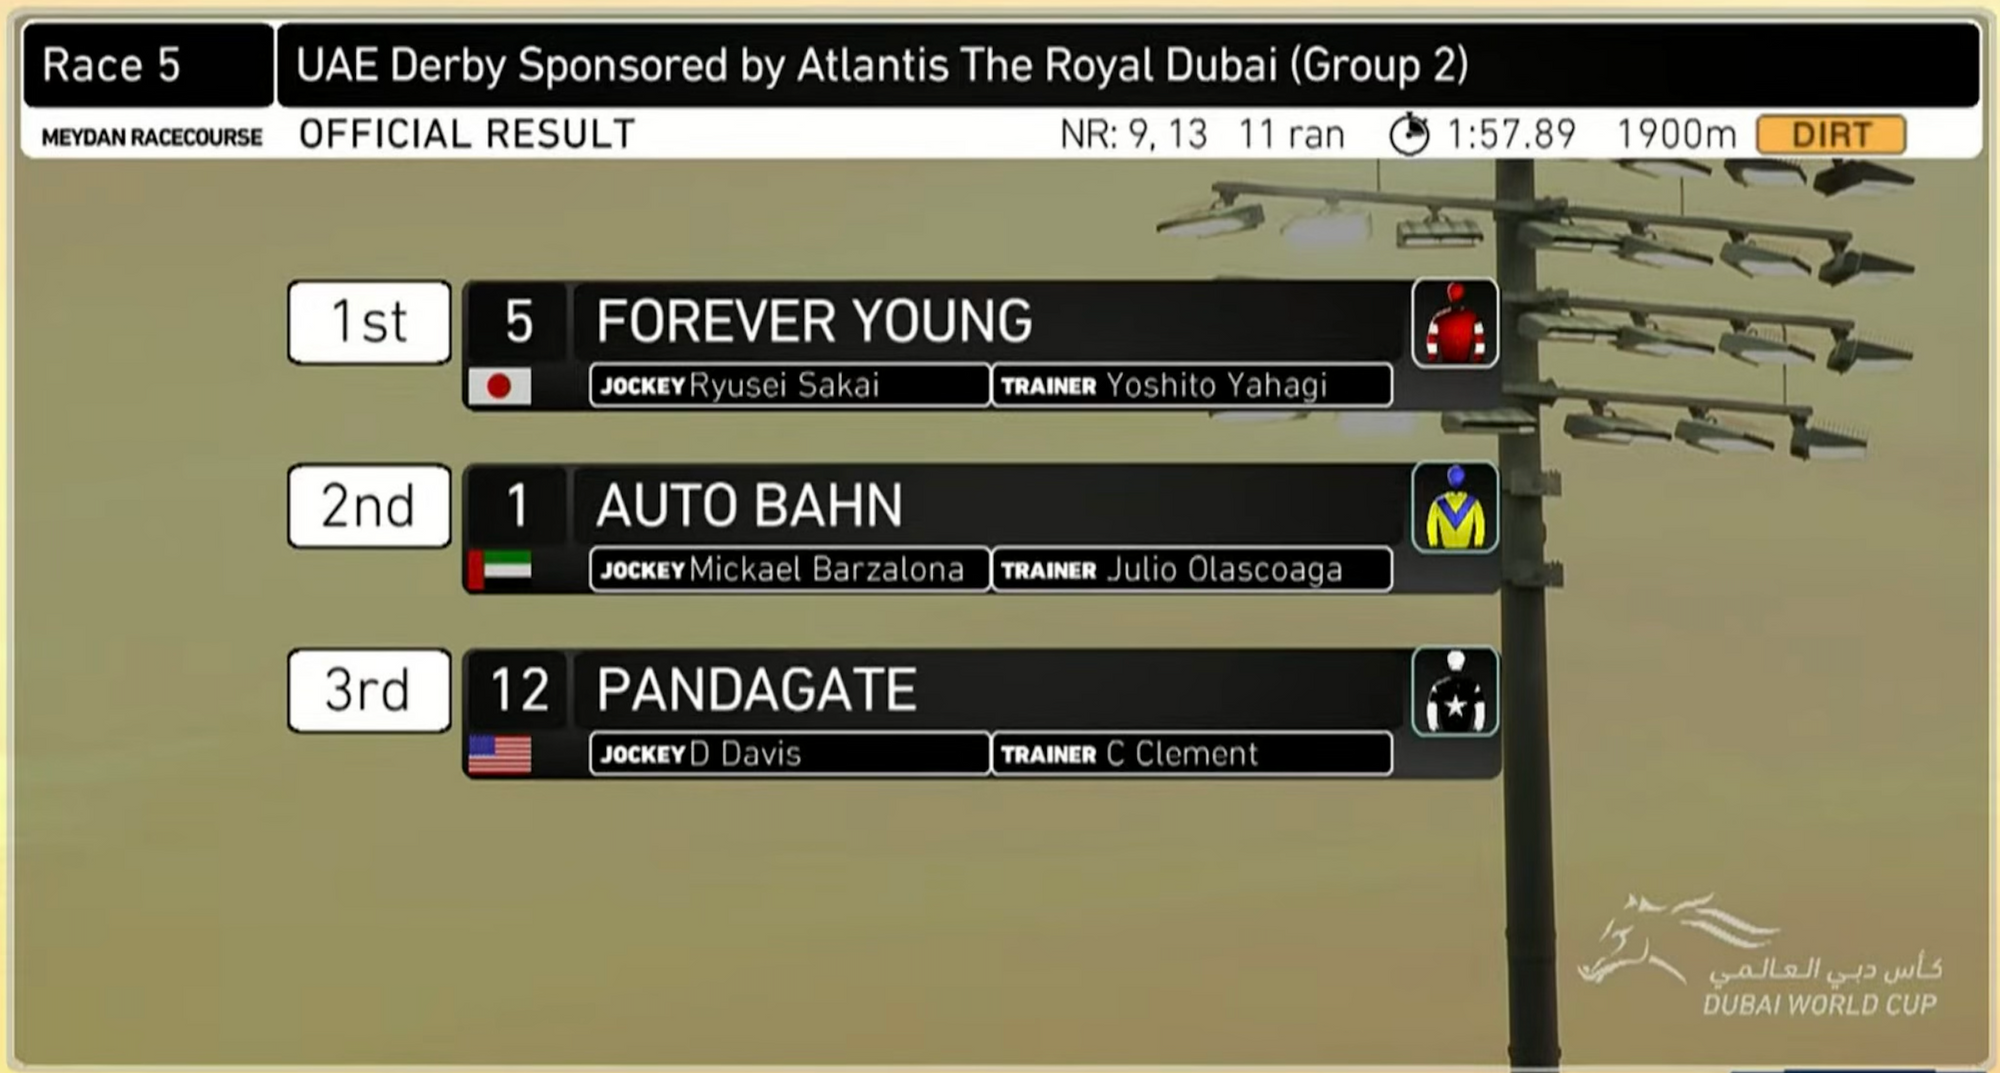 Pandagate Hits The Board In G2 UAE Derby!